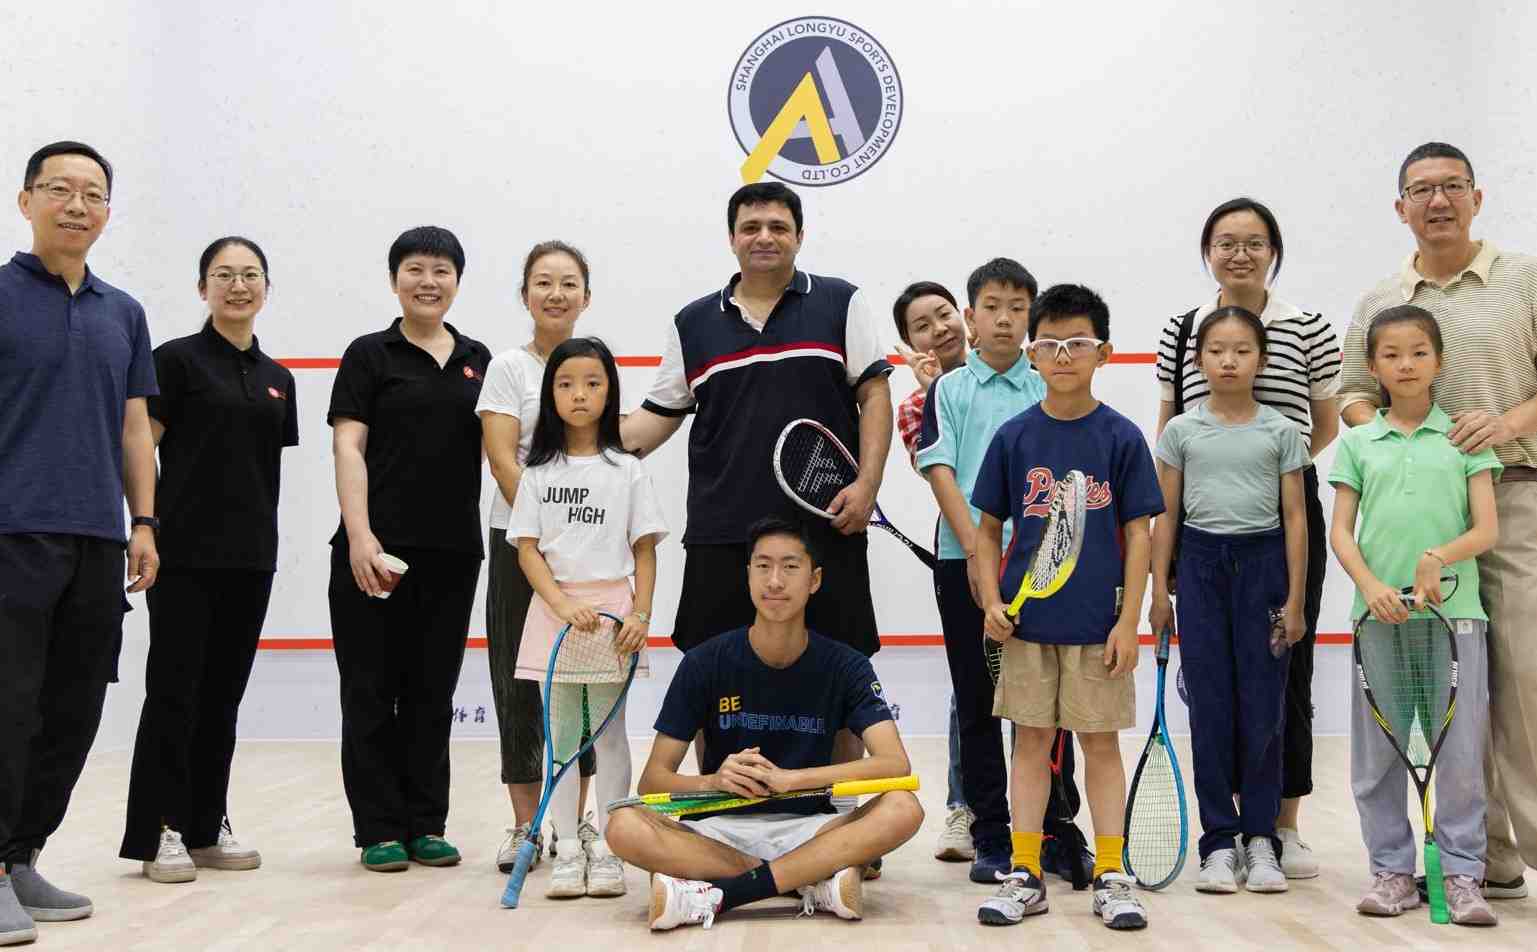 Squash News: Shahid Zaman visits Shanghai to coach budding players